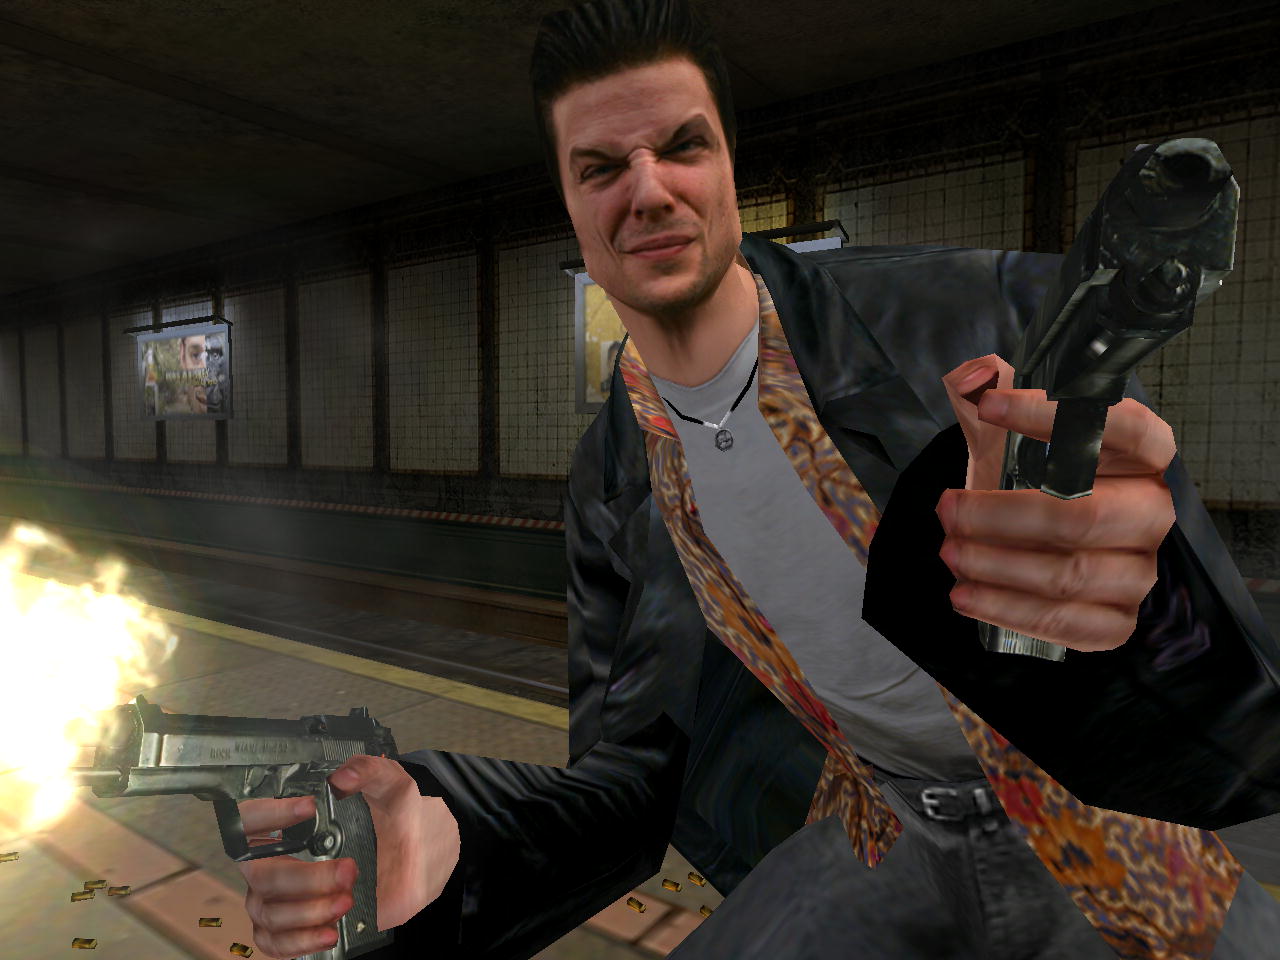 Max Payne HD wallpapers, Desktop wallpaper - most viewed